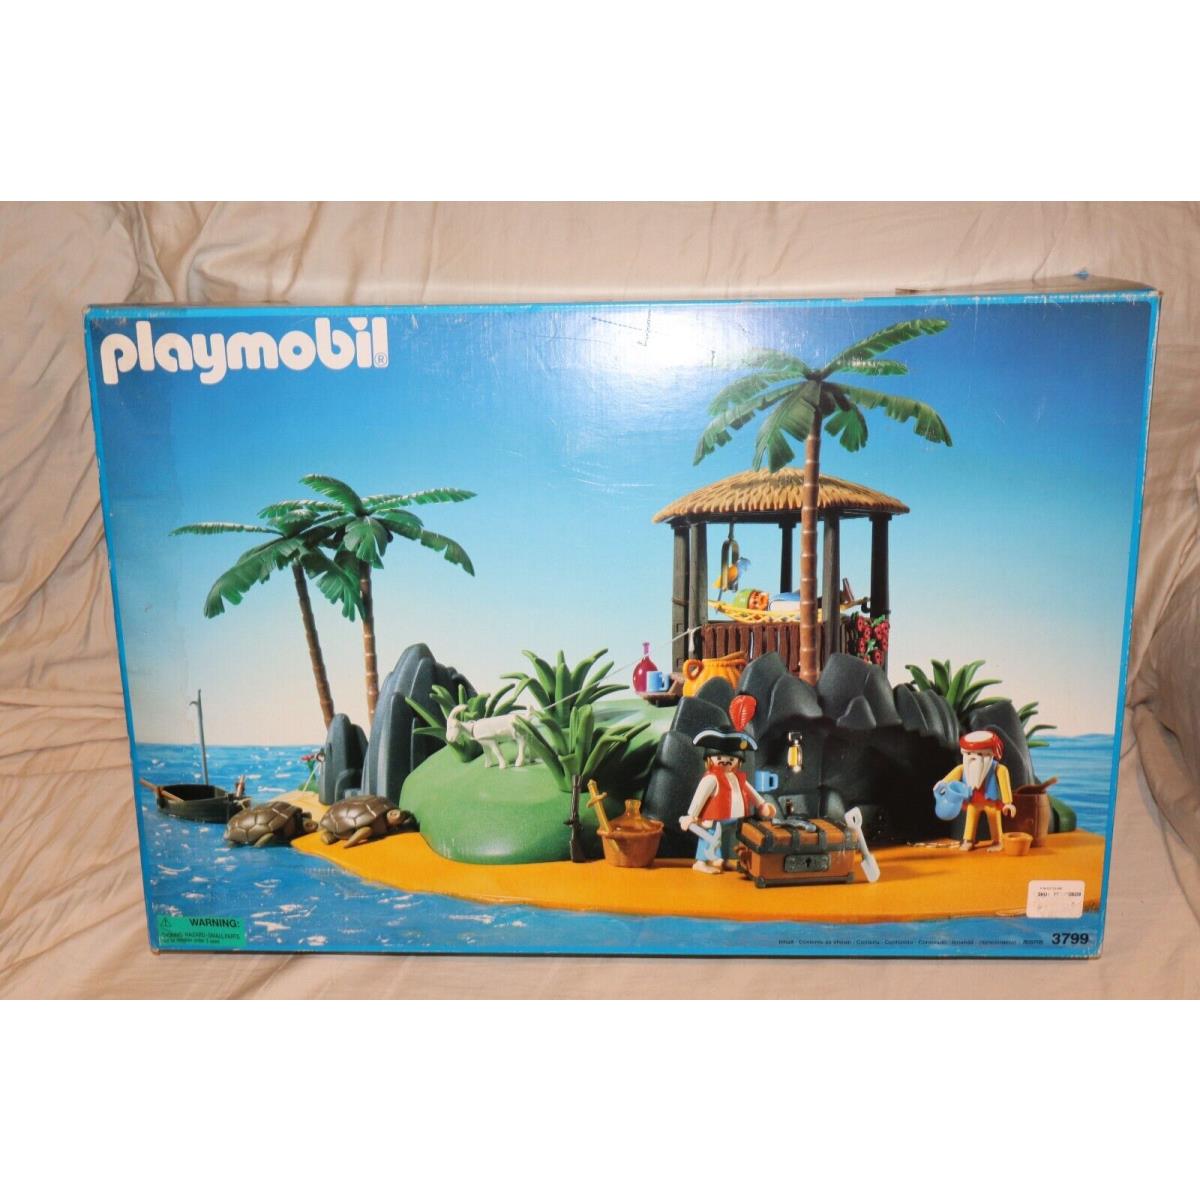 Playmobil 3799 Pirate Turtle Cove Desert Island Playset Read